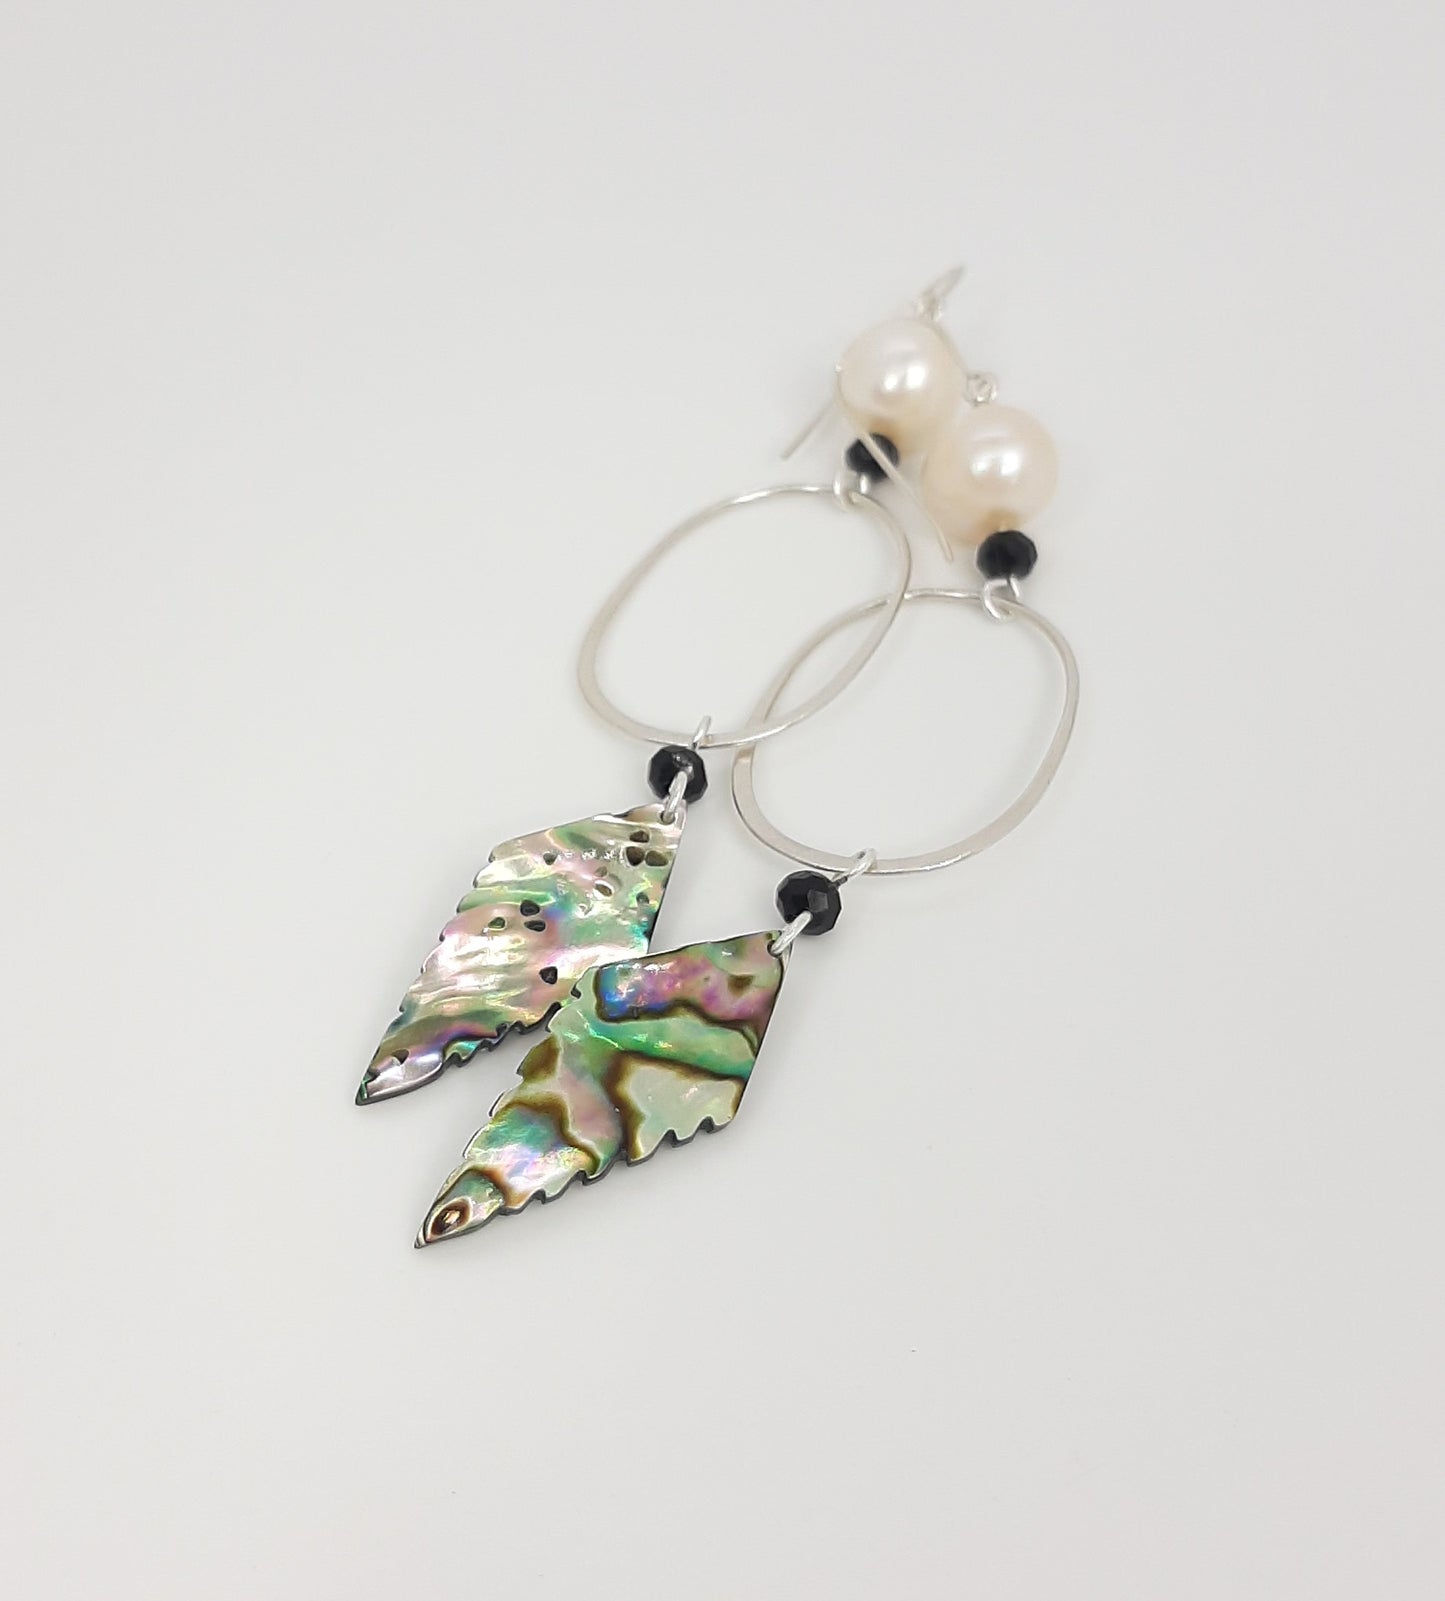 Abolone + Freshwater Pearls + Sterling Silver Oval Link Earrings